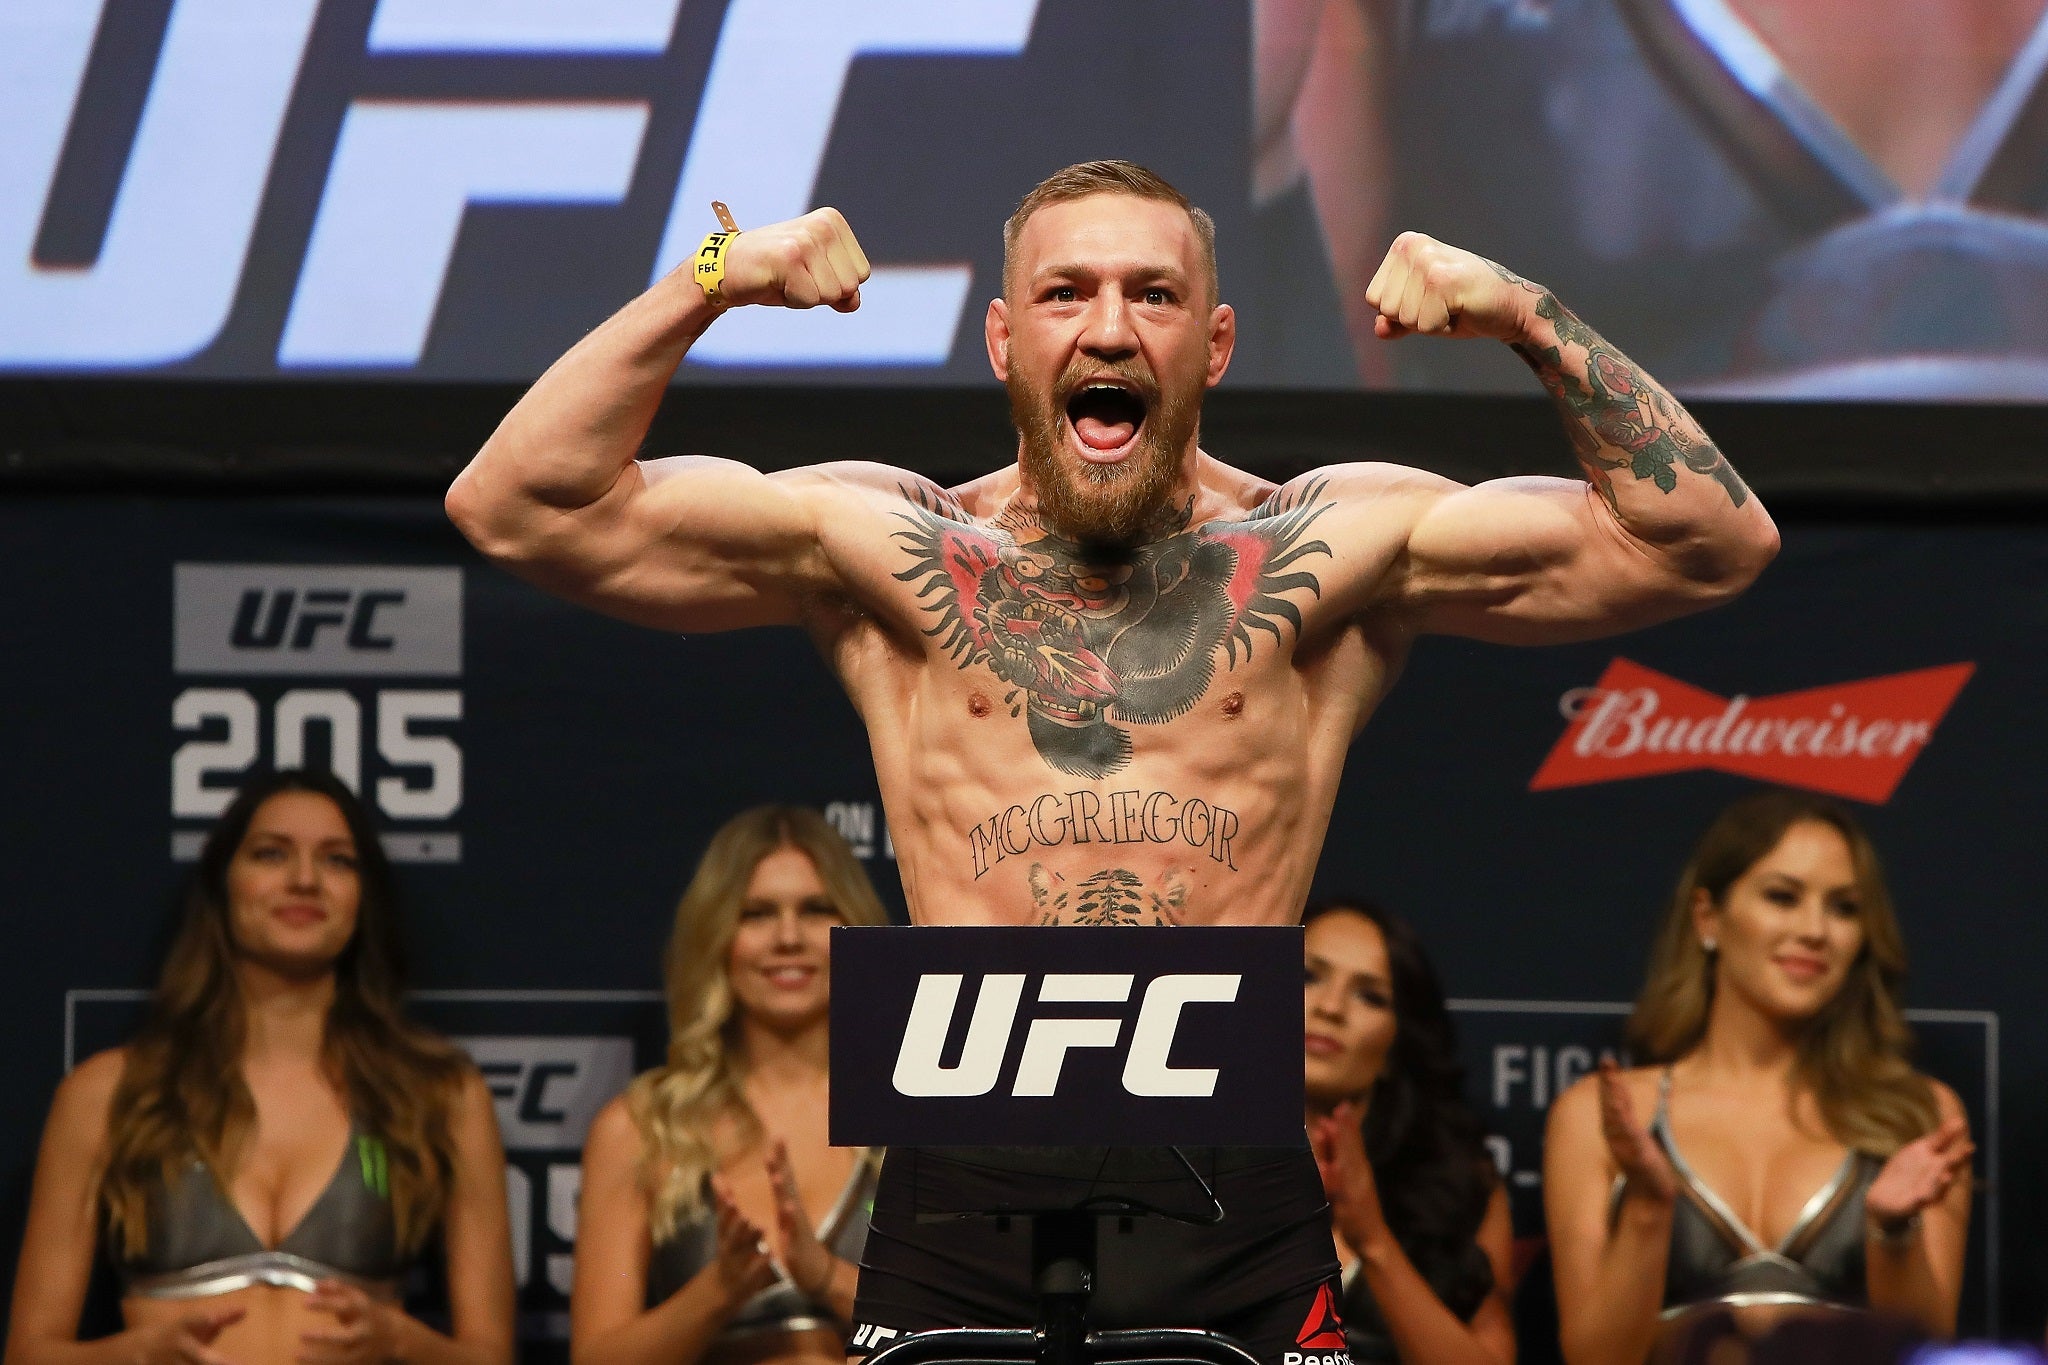 Conor McGregor weighs in ahead of his UFC 205 fight with Eddie Alvarez